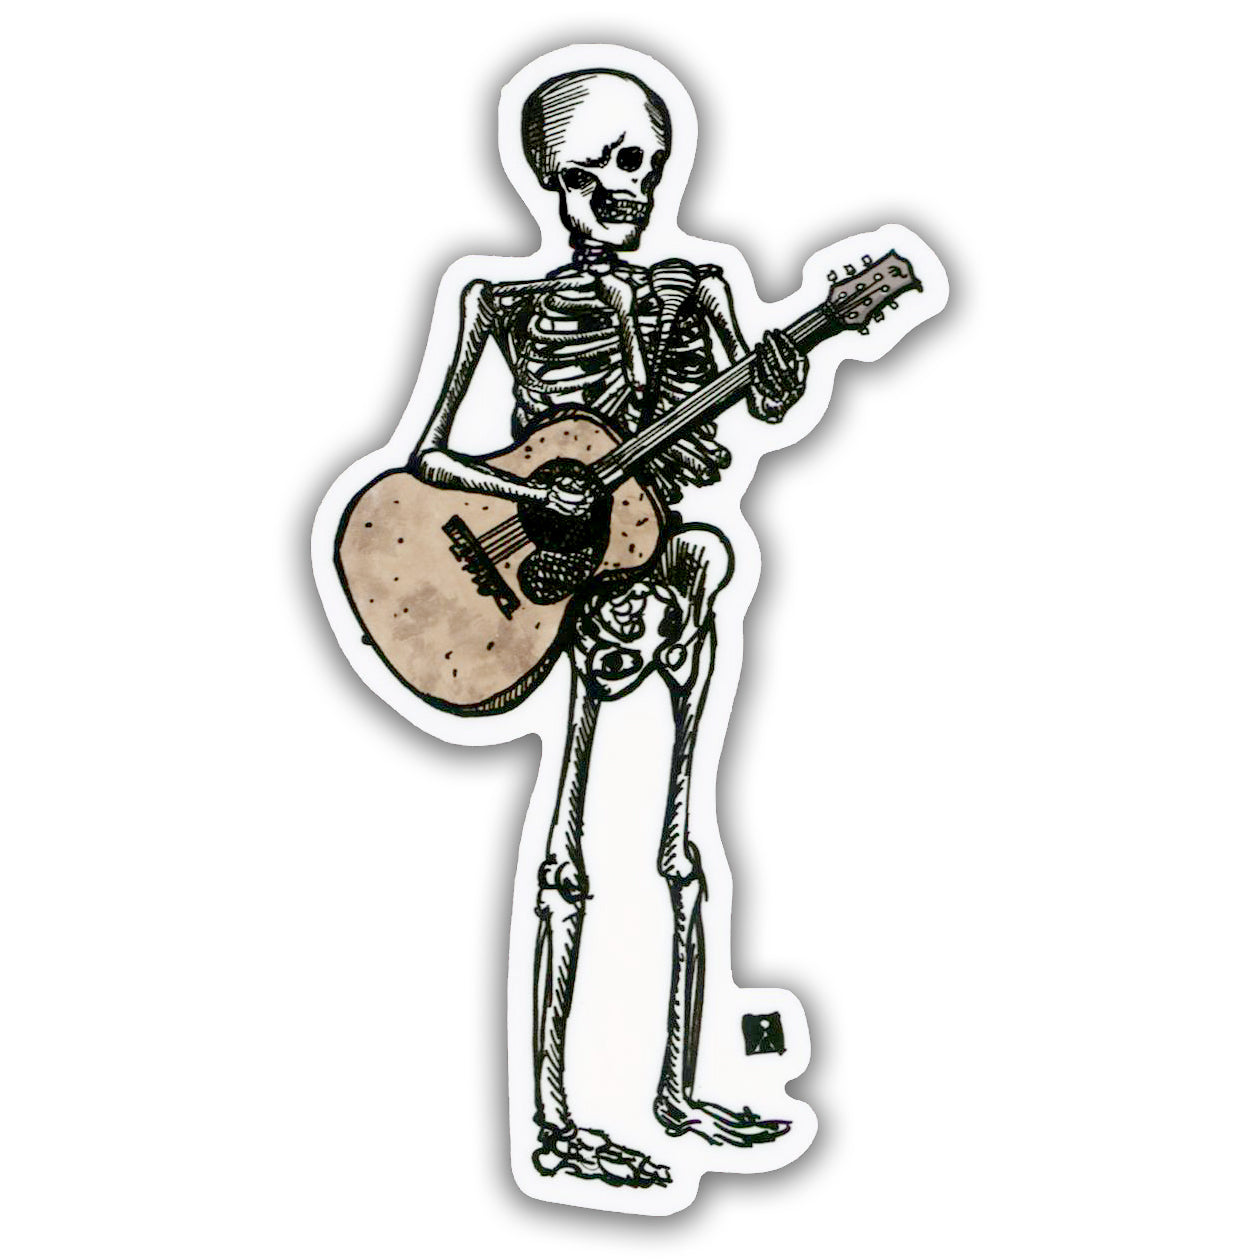 Skeleton Playing Acoustic Guitar Sticker